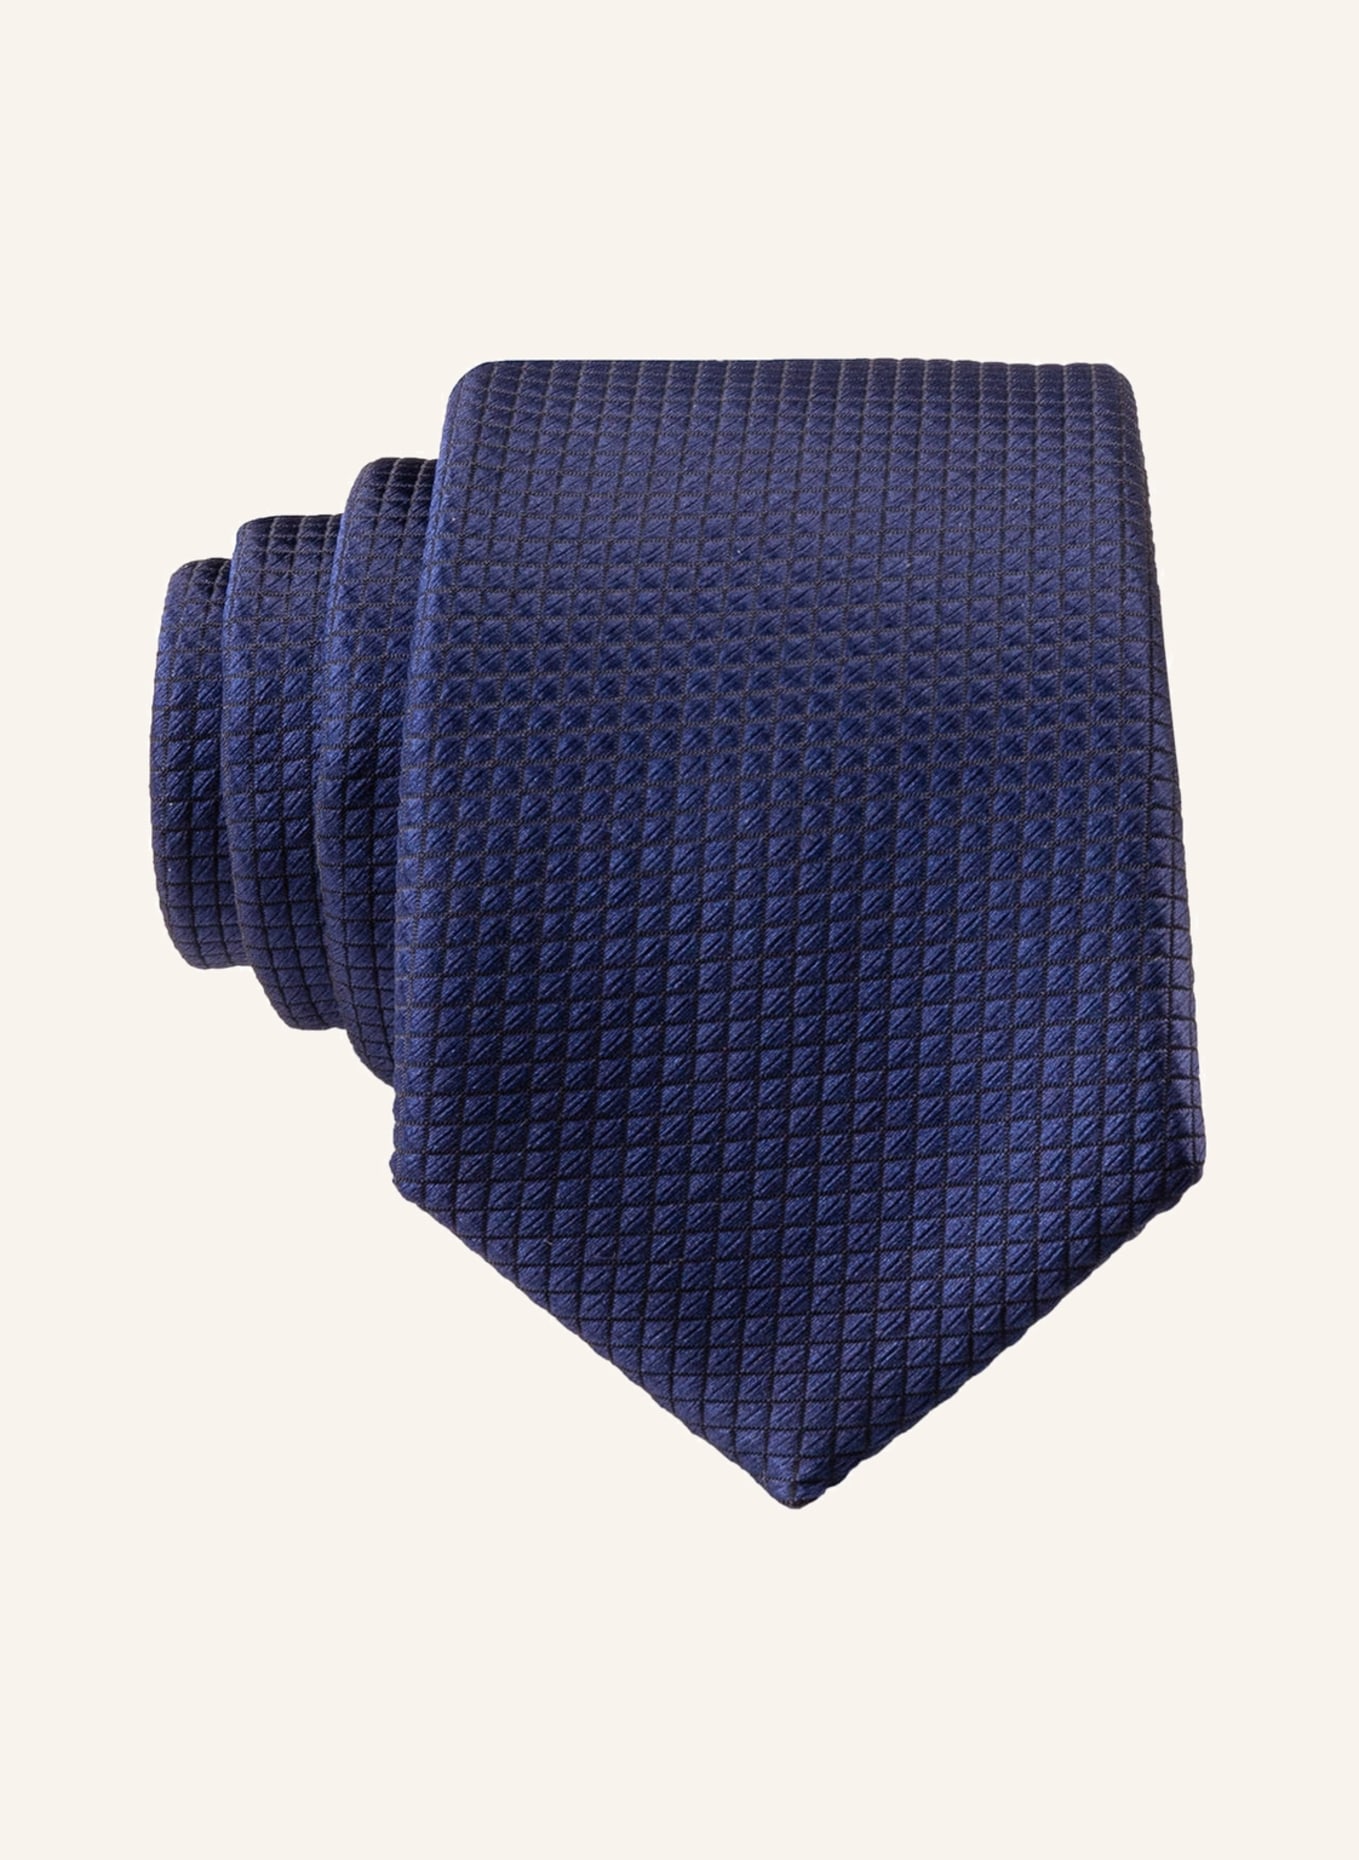 G.O.L. FINEST COLLECTION Krawatte, Farbe: DUNKELBLAU (Bild 1)